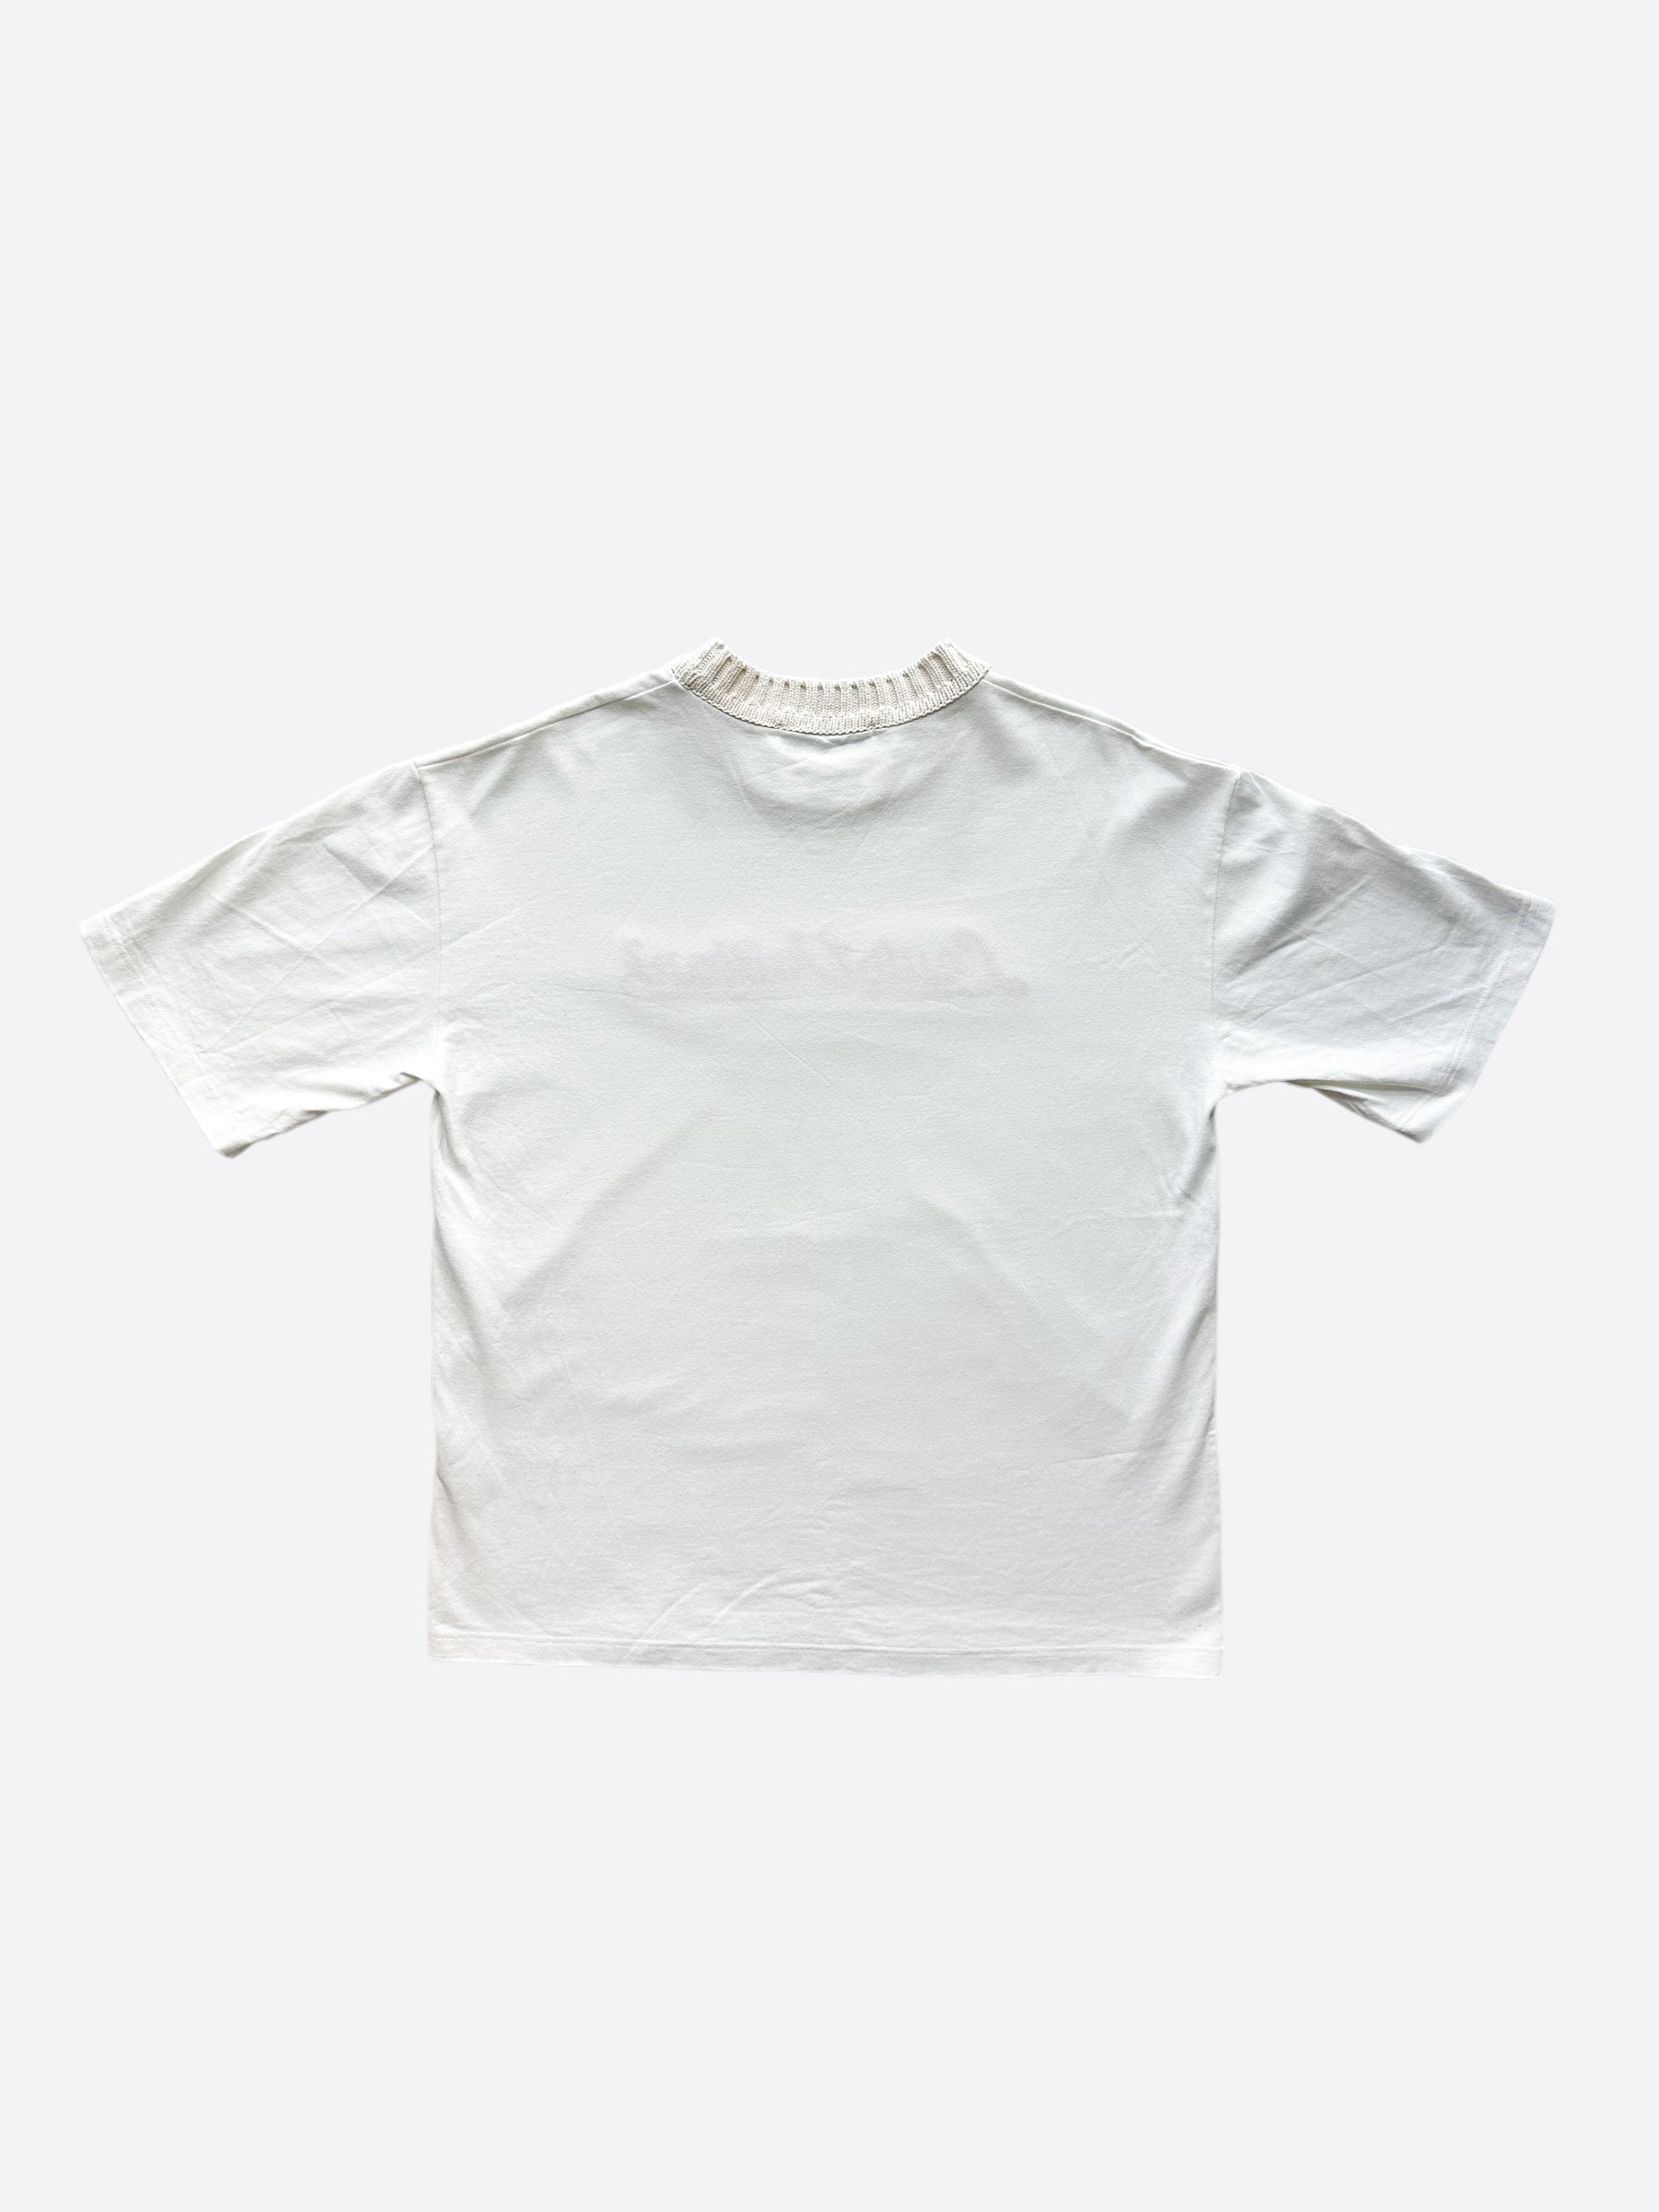 Louis Vuitton x Nigo 2022 Graphic Print T-Shirt - White T-Shirts, Clothing  - LVNOU20140